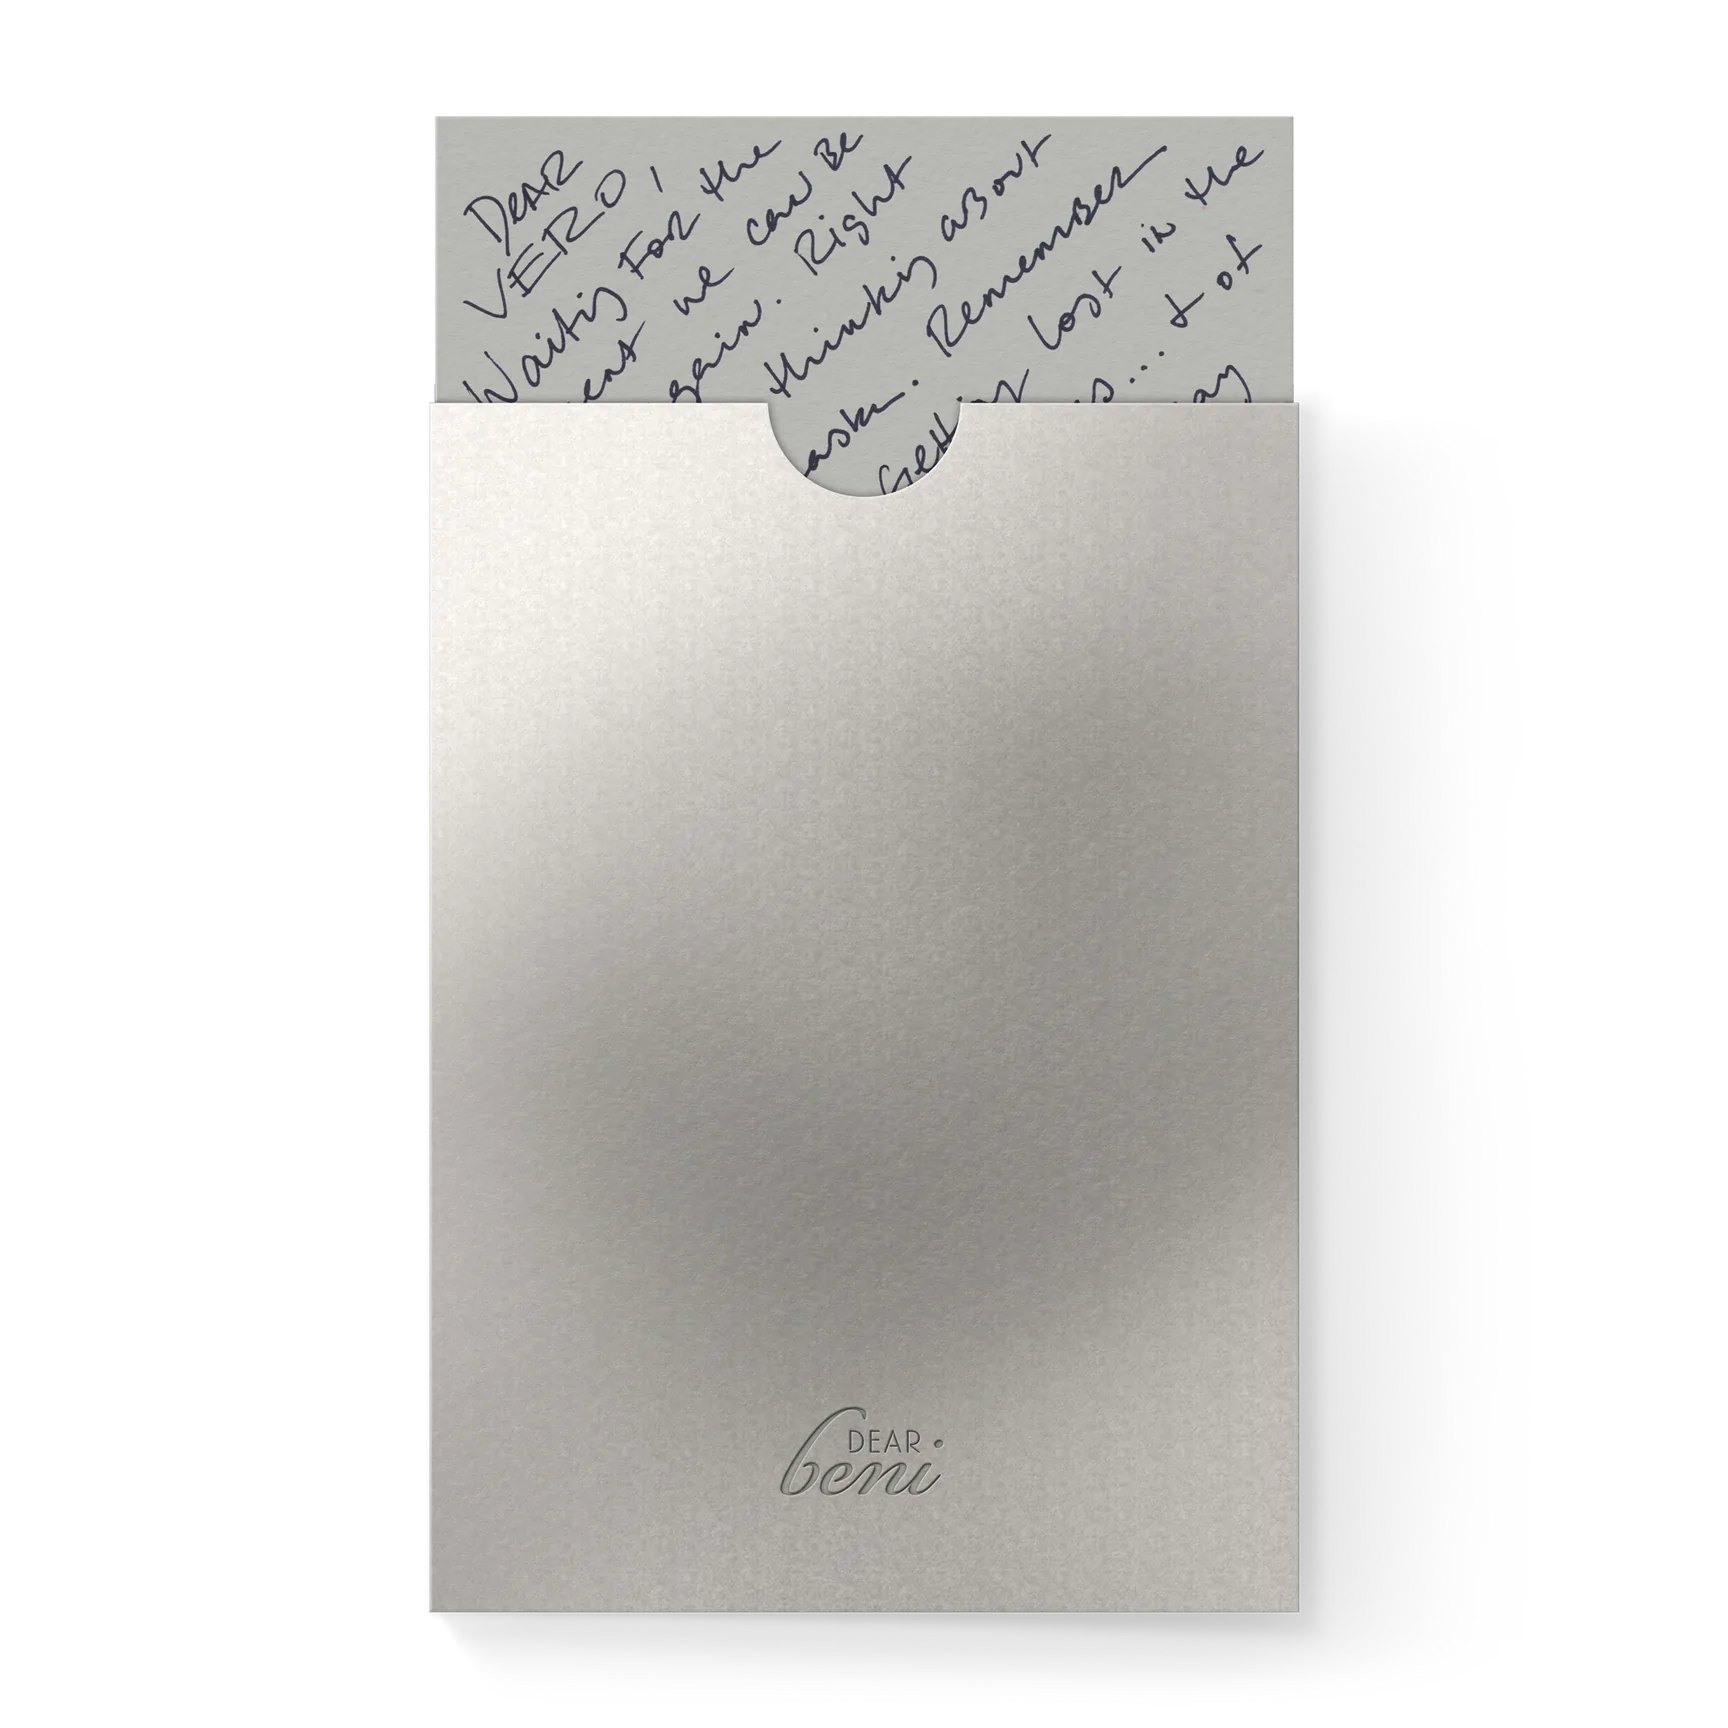 Happy New Year Pocket Greeting Card-Bespoke Designs